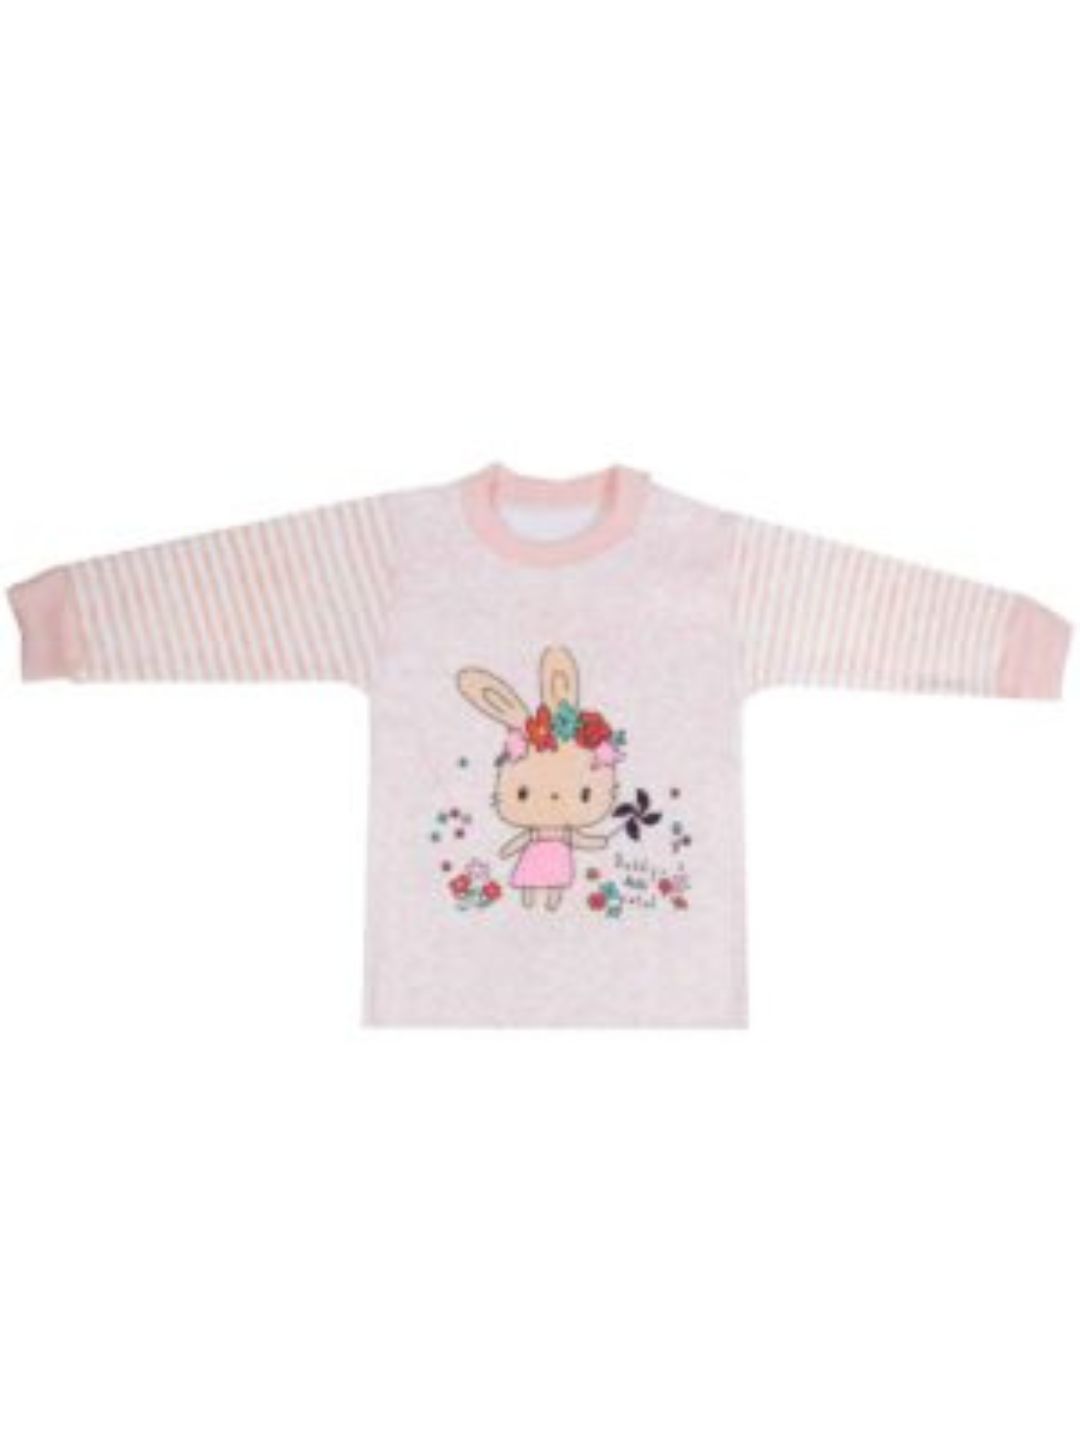 Winter Warm Fleece Kid’s Cartoon Thick Sweatshirt Tshirt and Pyjama Light Pink